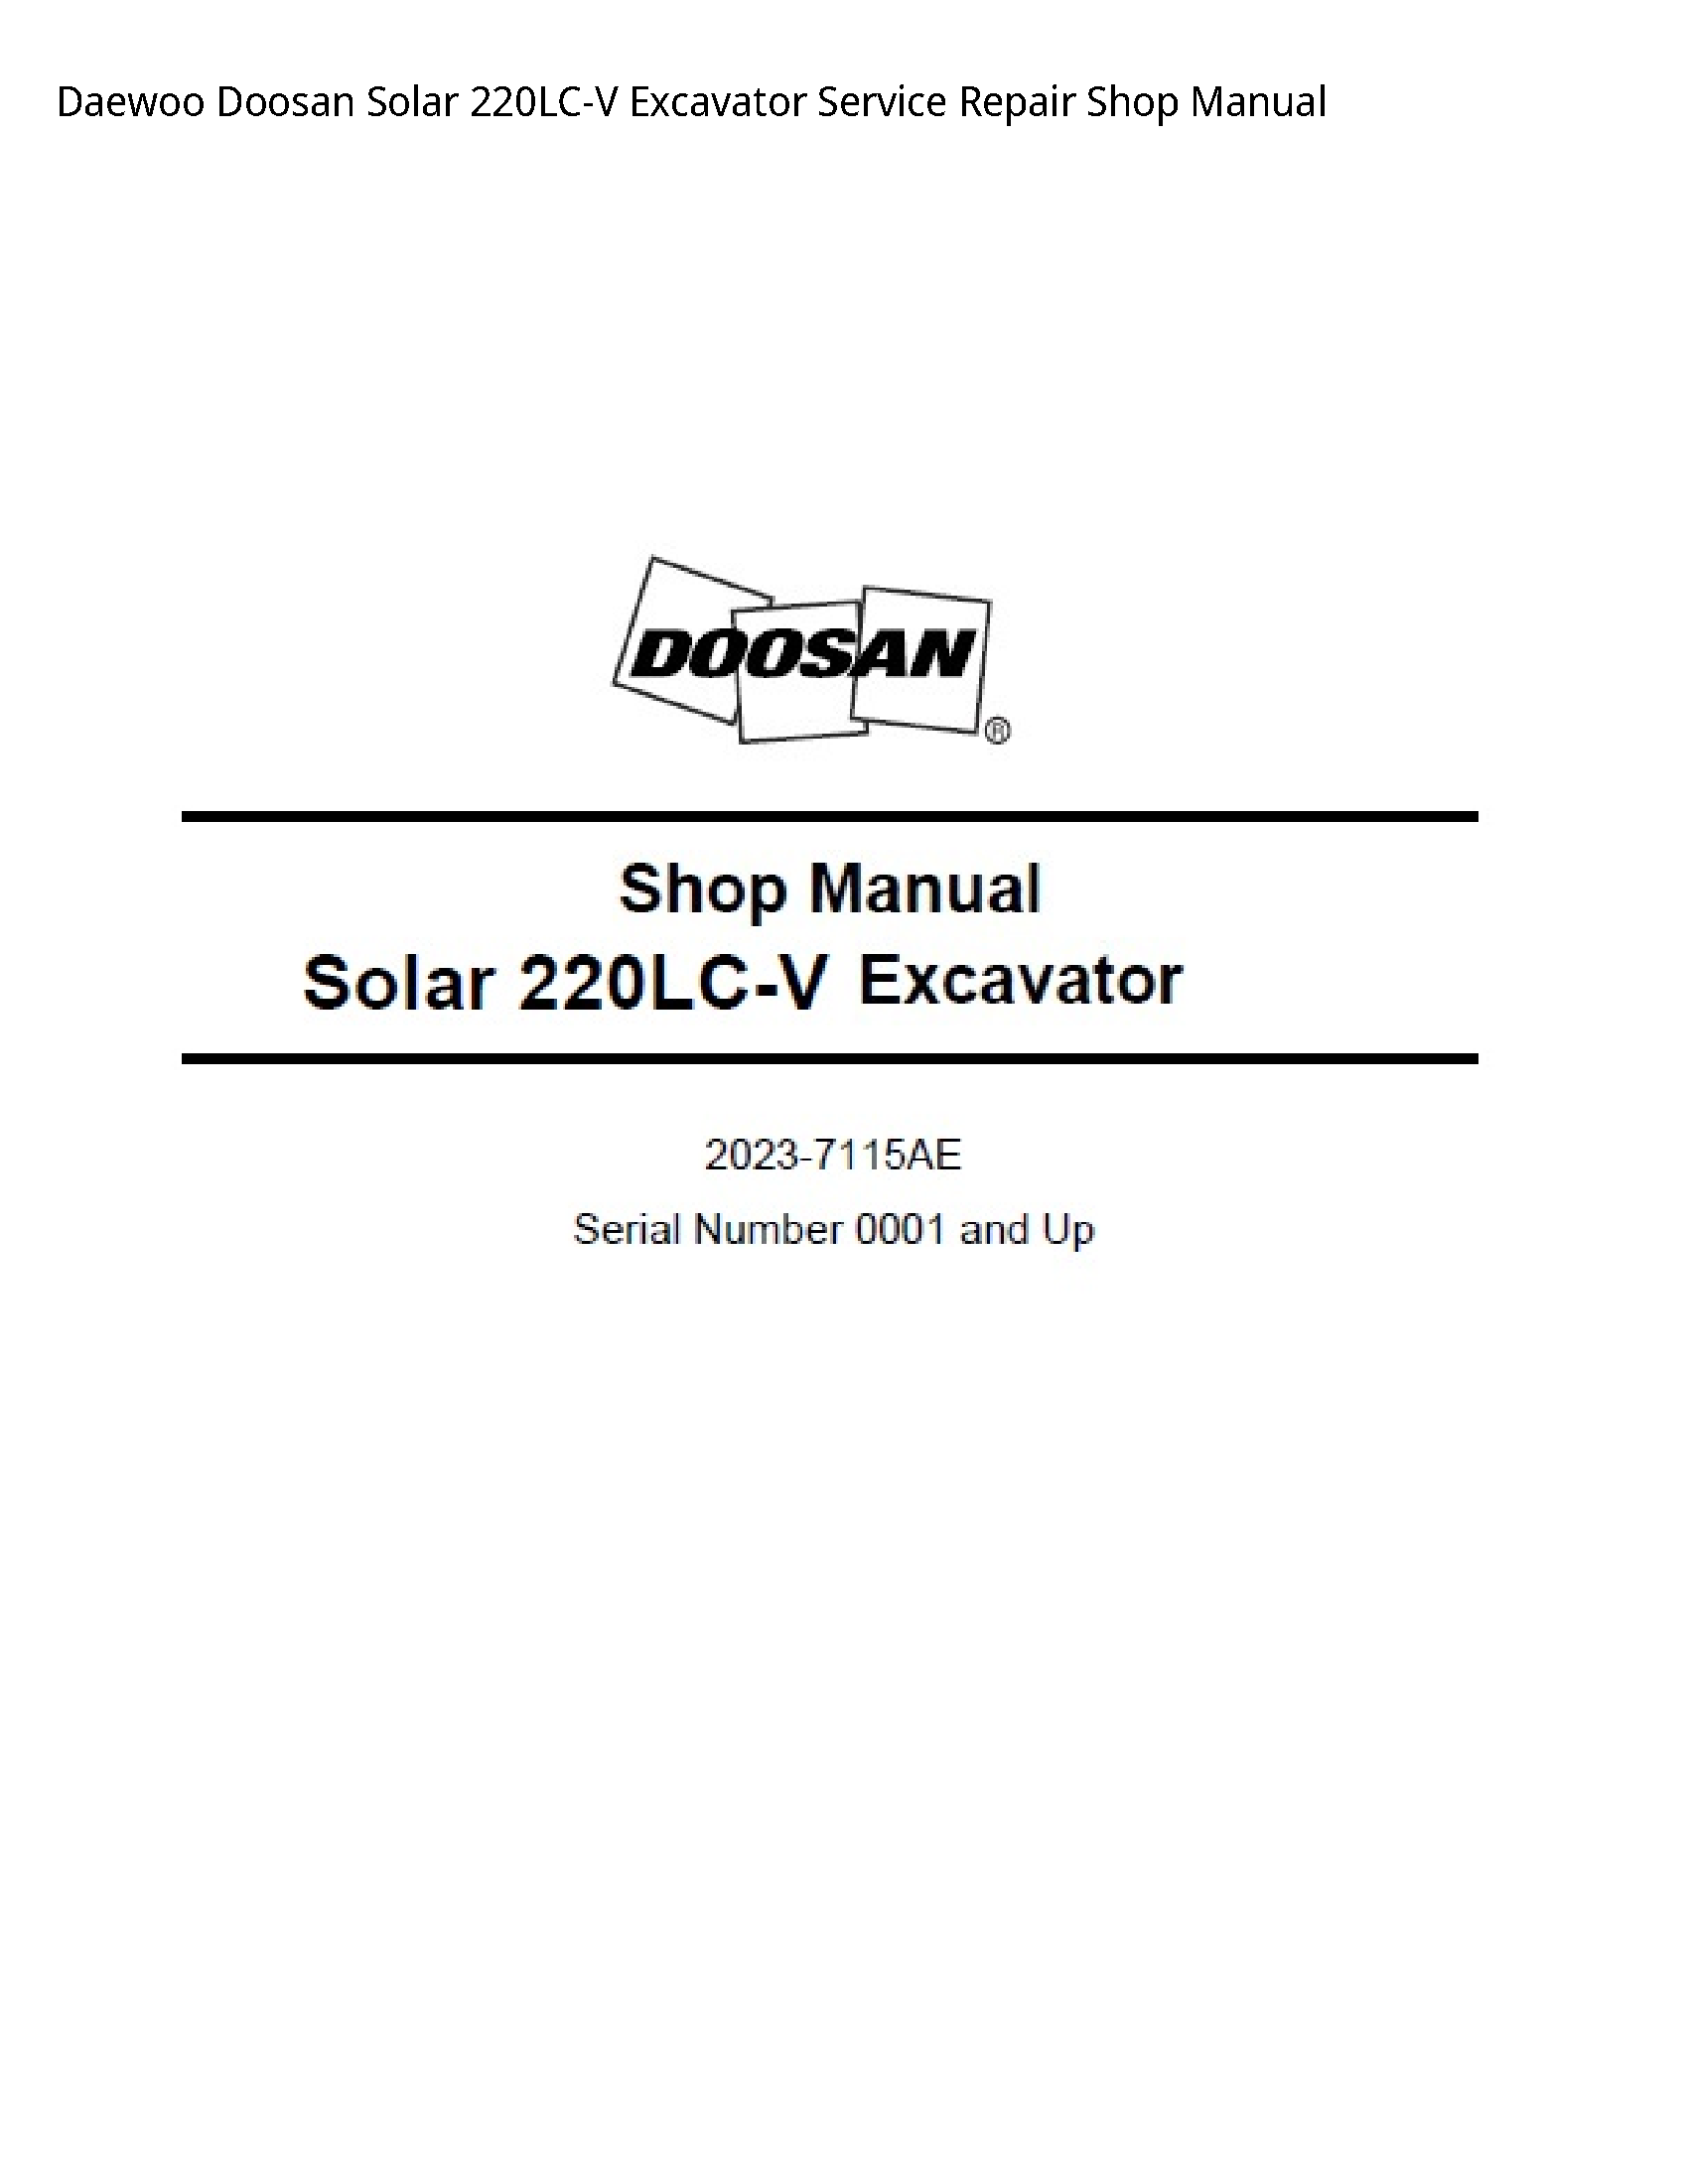 Daewoo Doosan 220LC-V Solar Excavator manual